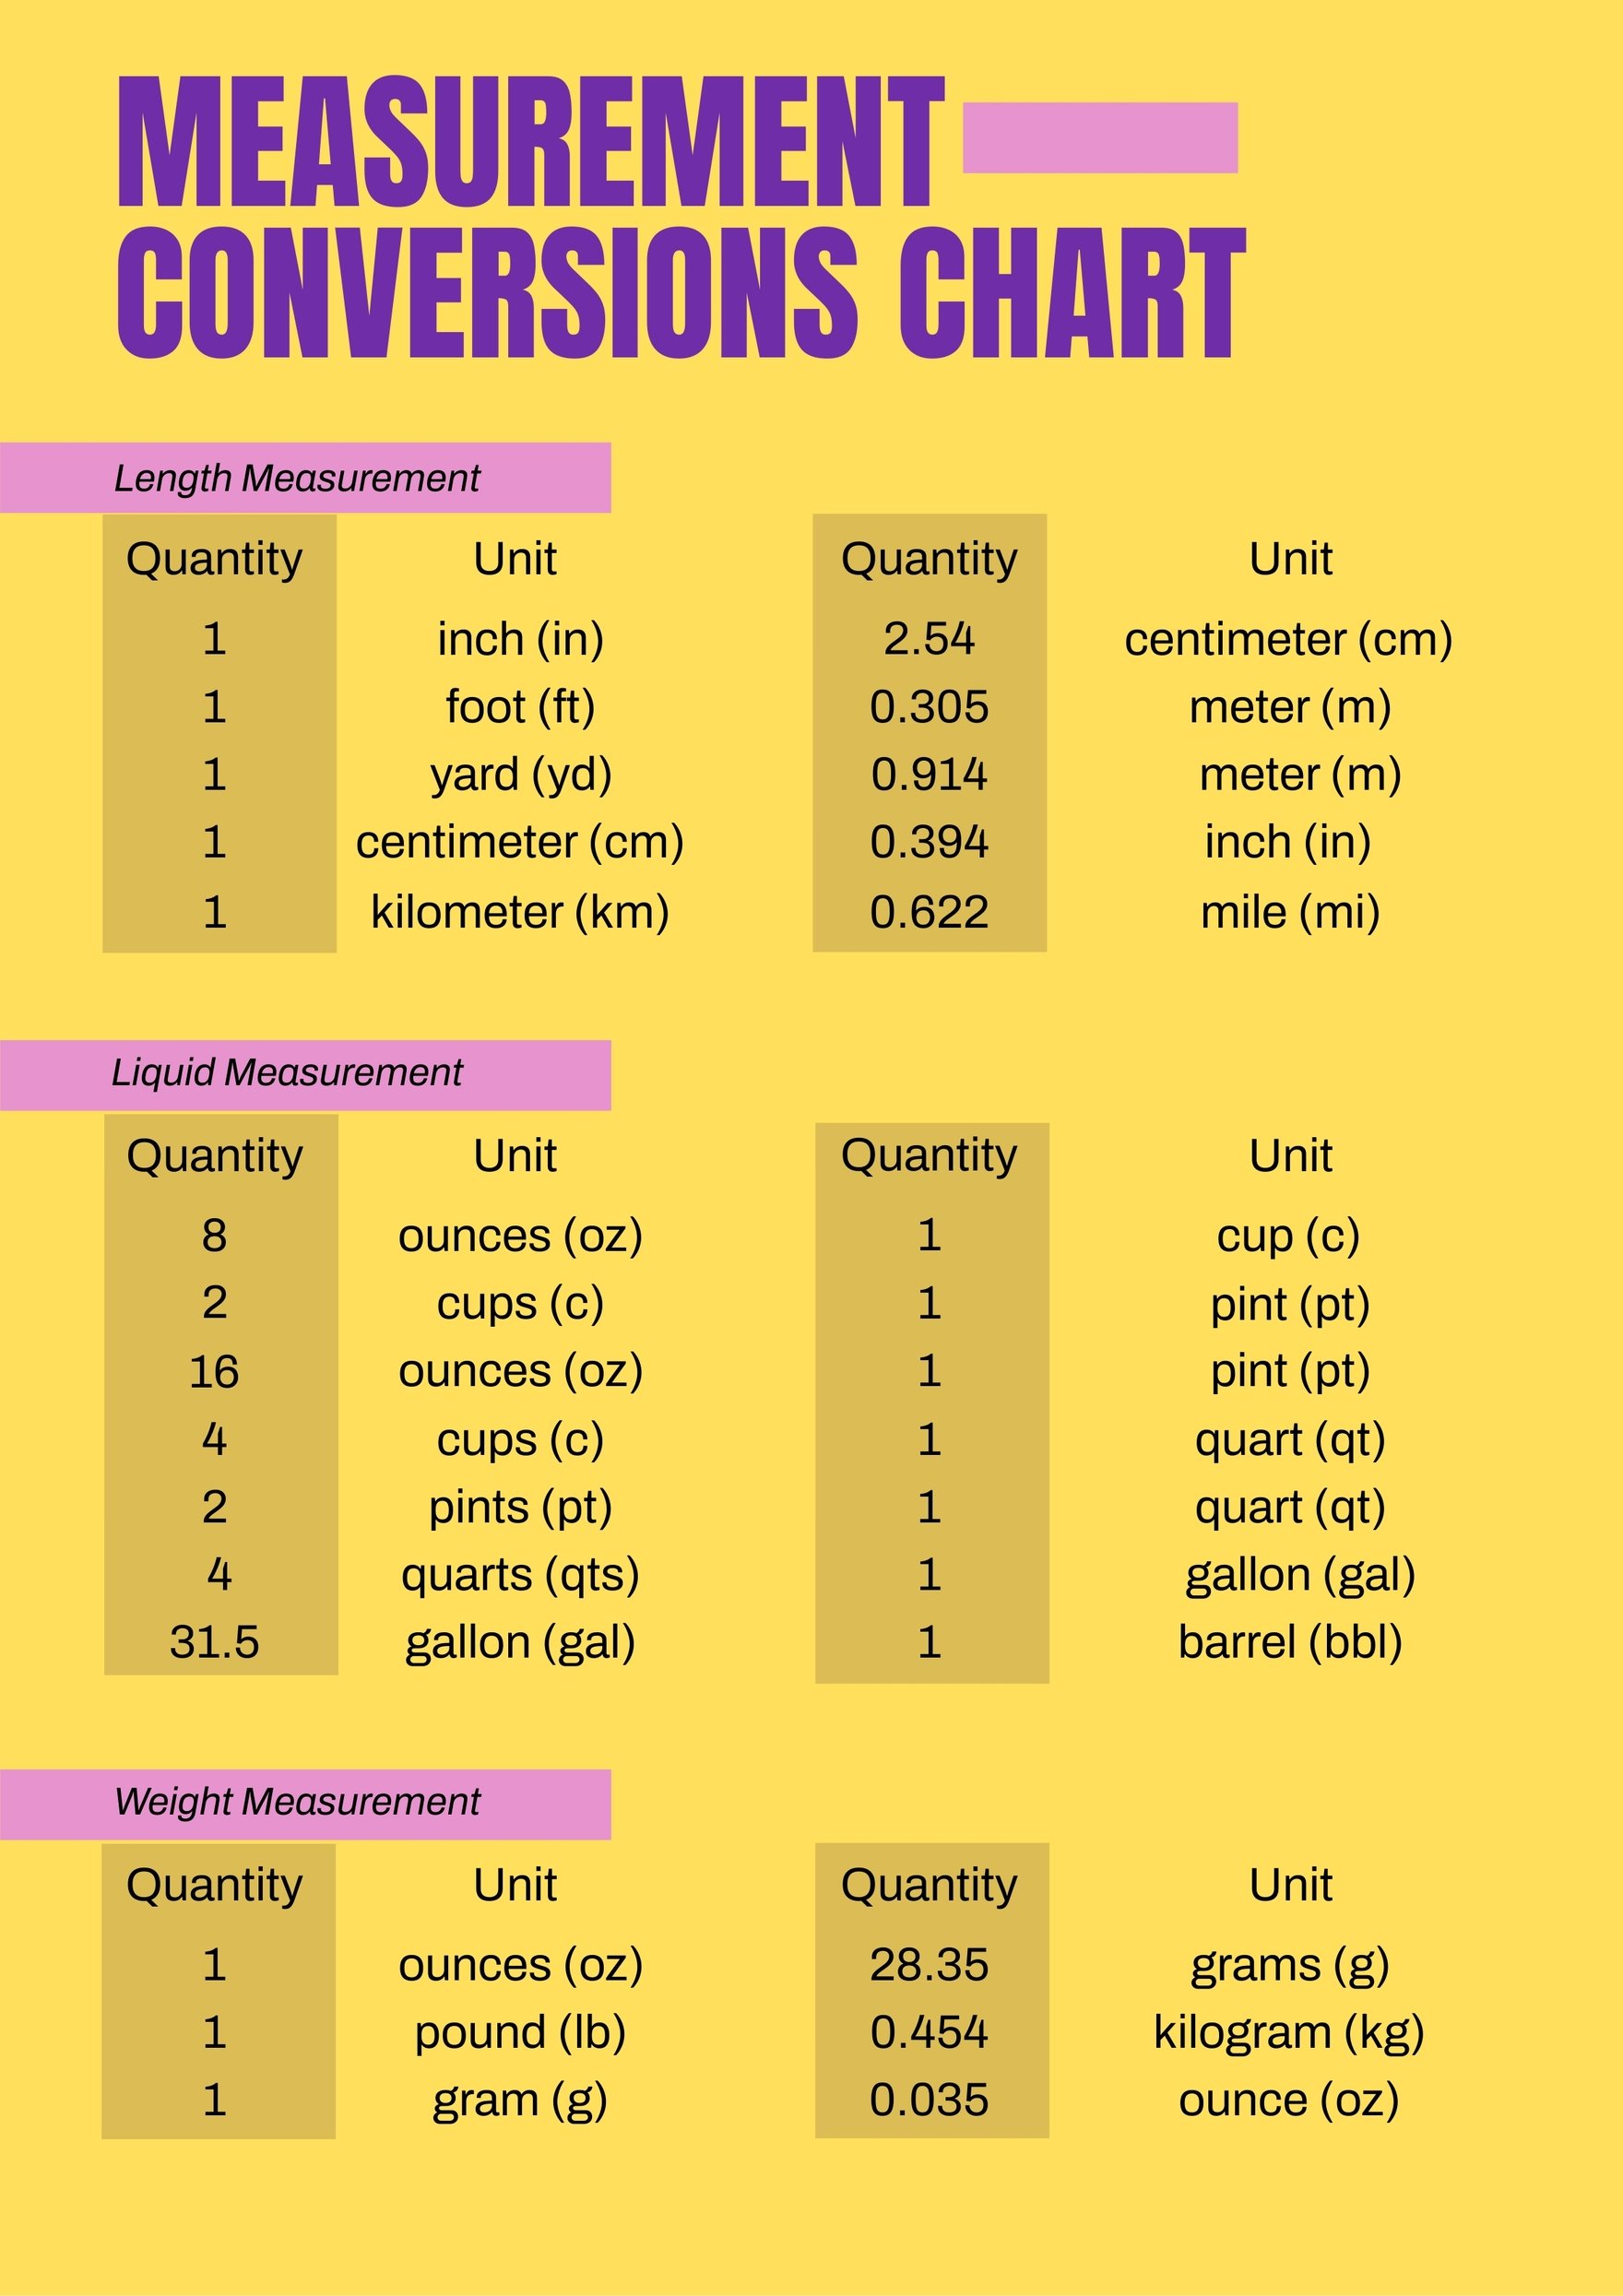 Measurement Conversions Chart in PDF, Illustrator